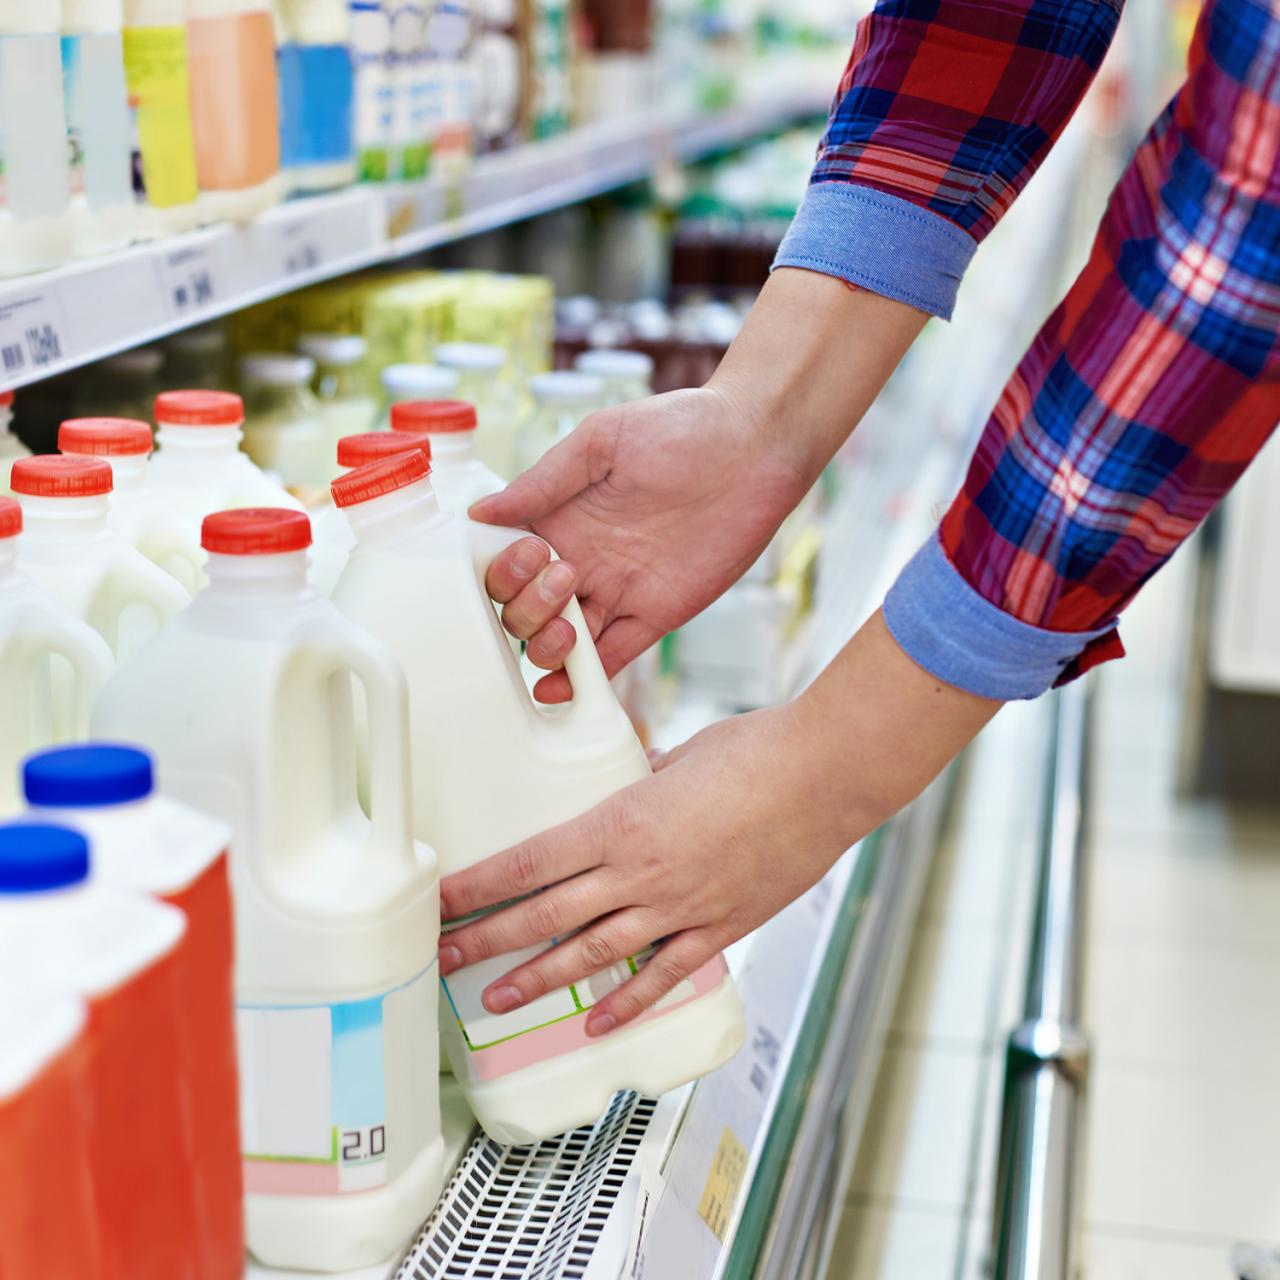 Is Skim Milk Healthy?, Food Network Healthy Eats: Recipes, Ideas, and Food  News